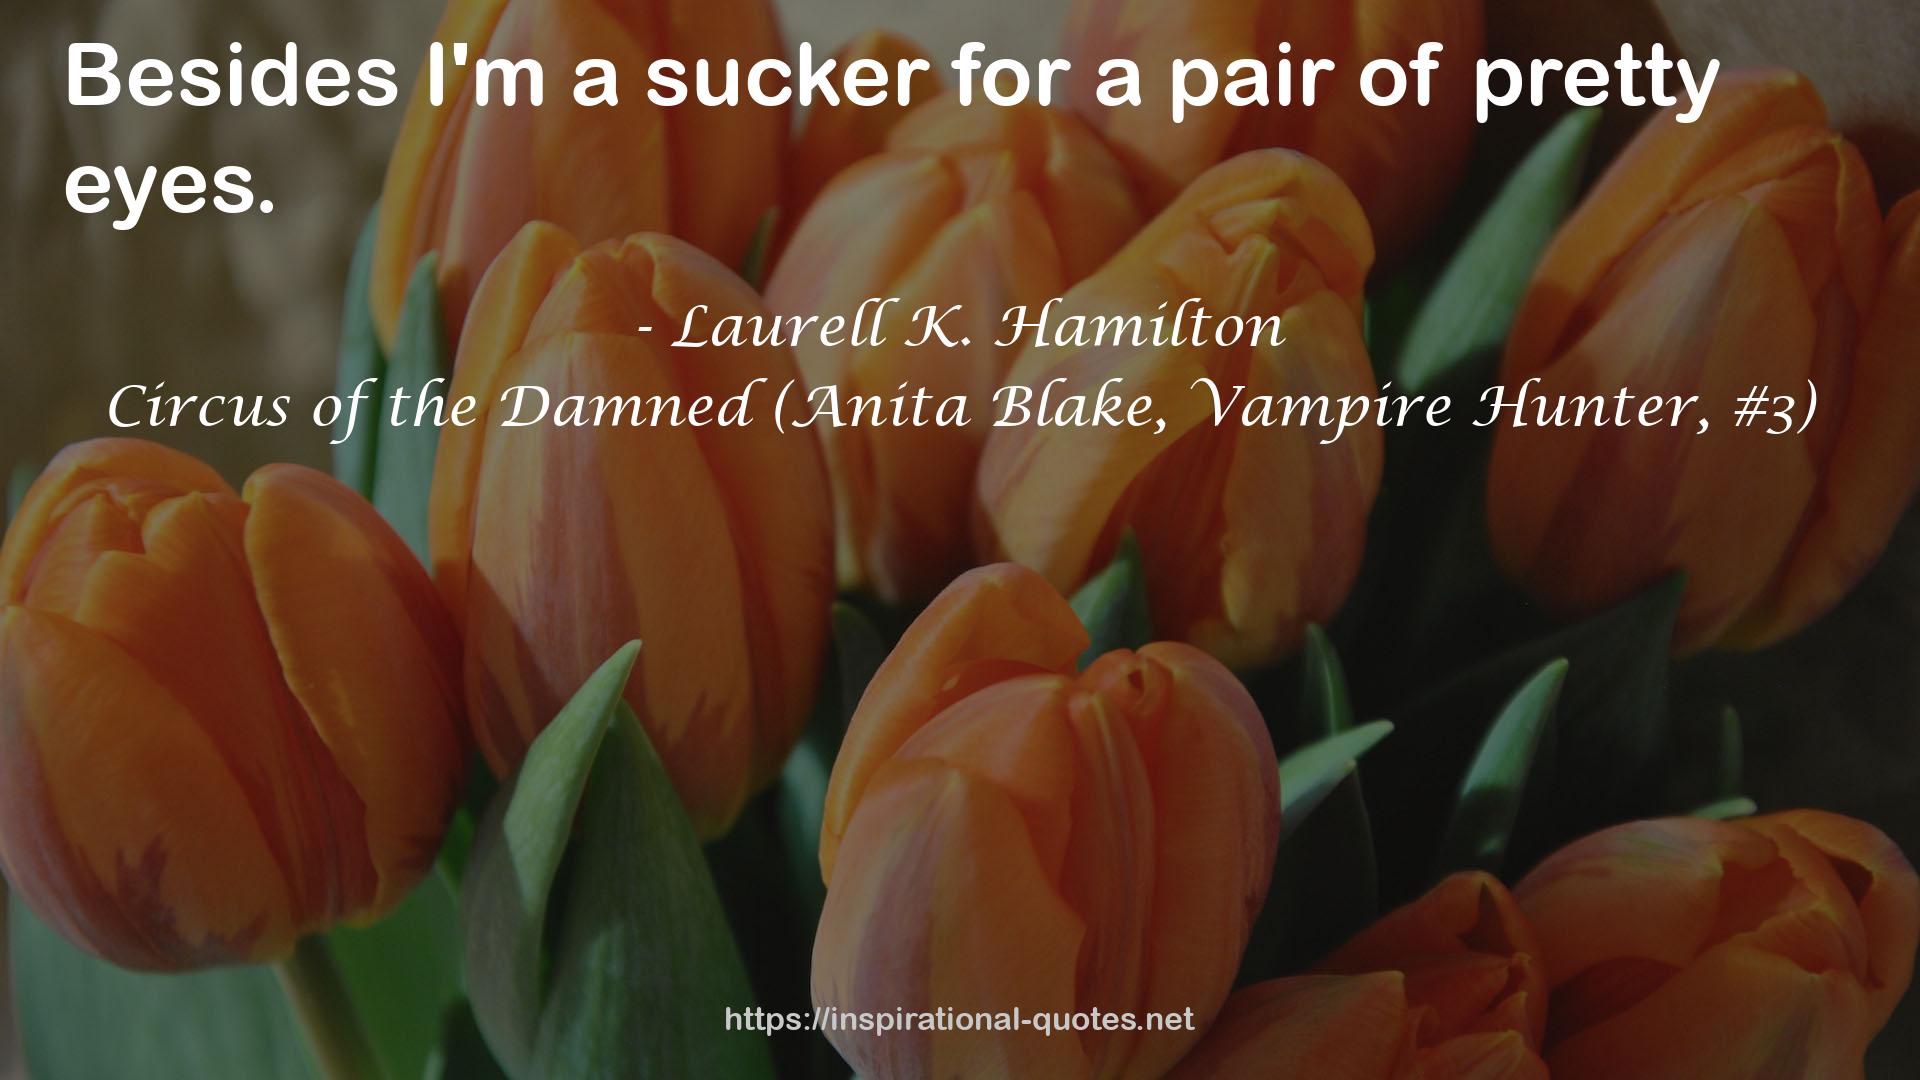 Circus of the Damned (Anita Blake, Vampire Hunter, #3) QUOTES